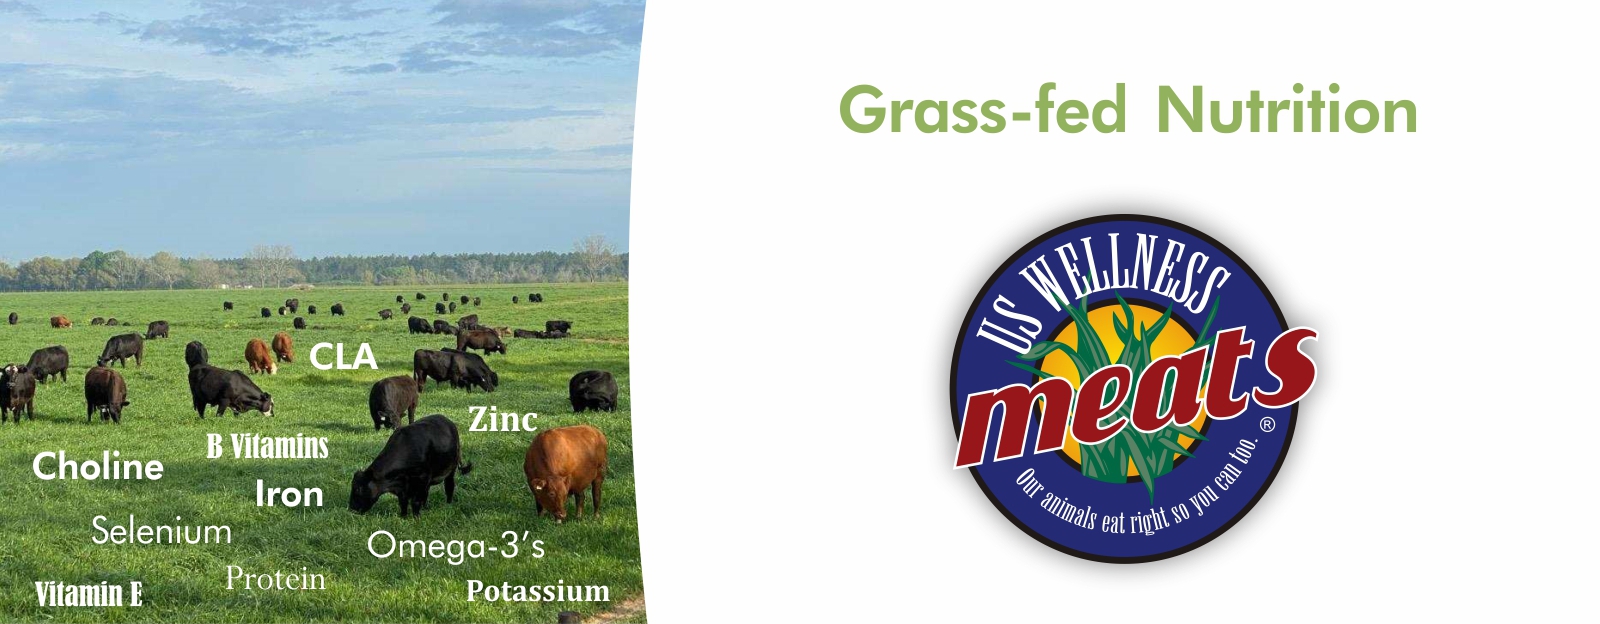 grass-fed nutrition